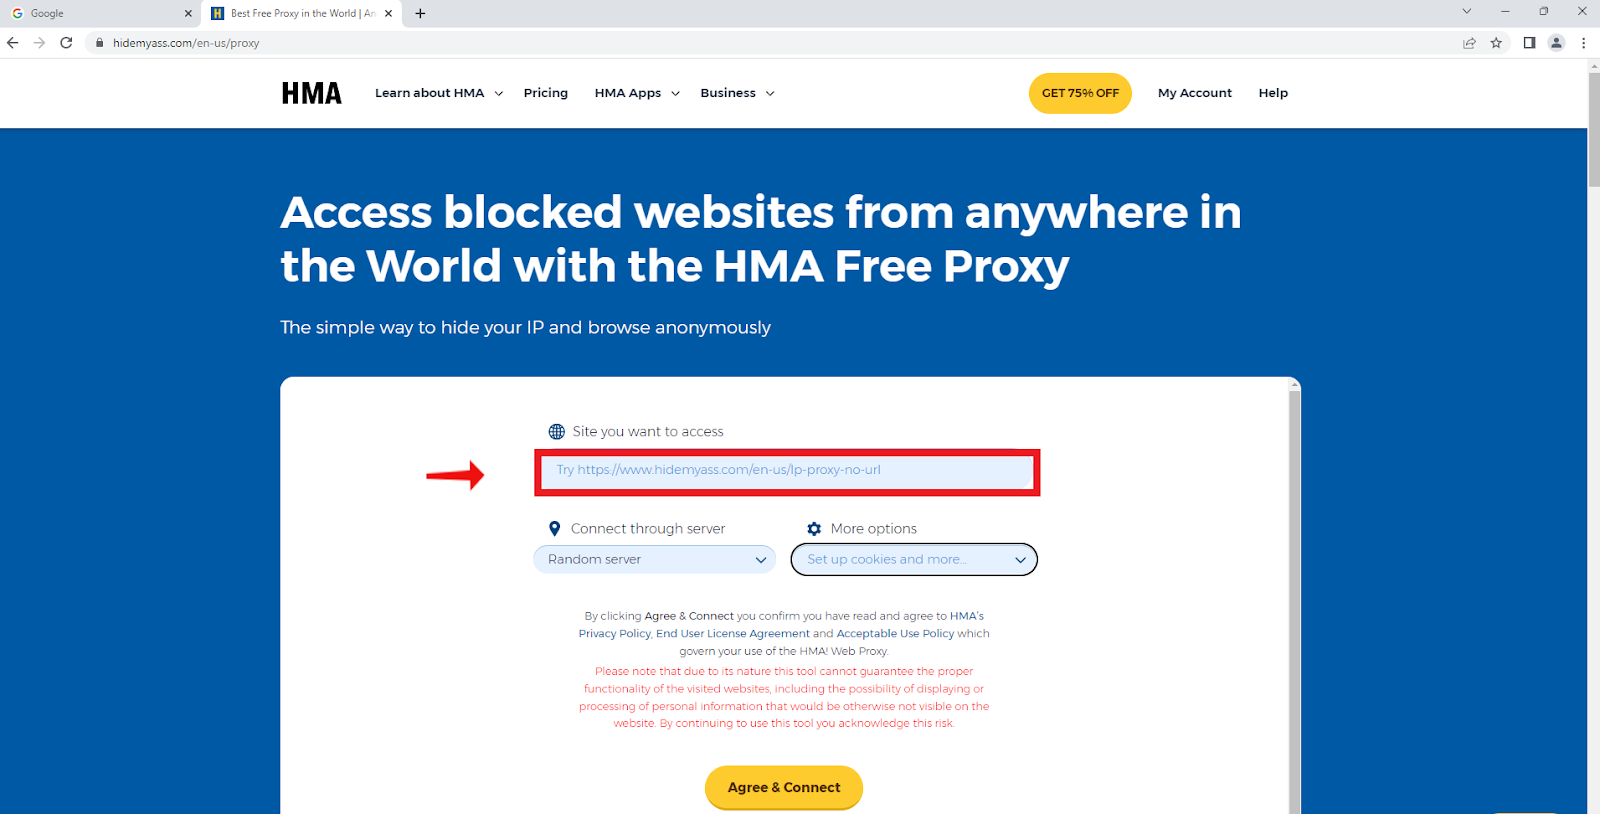 How to Unblock Sites at School - Top Ways